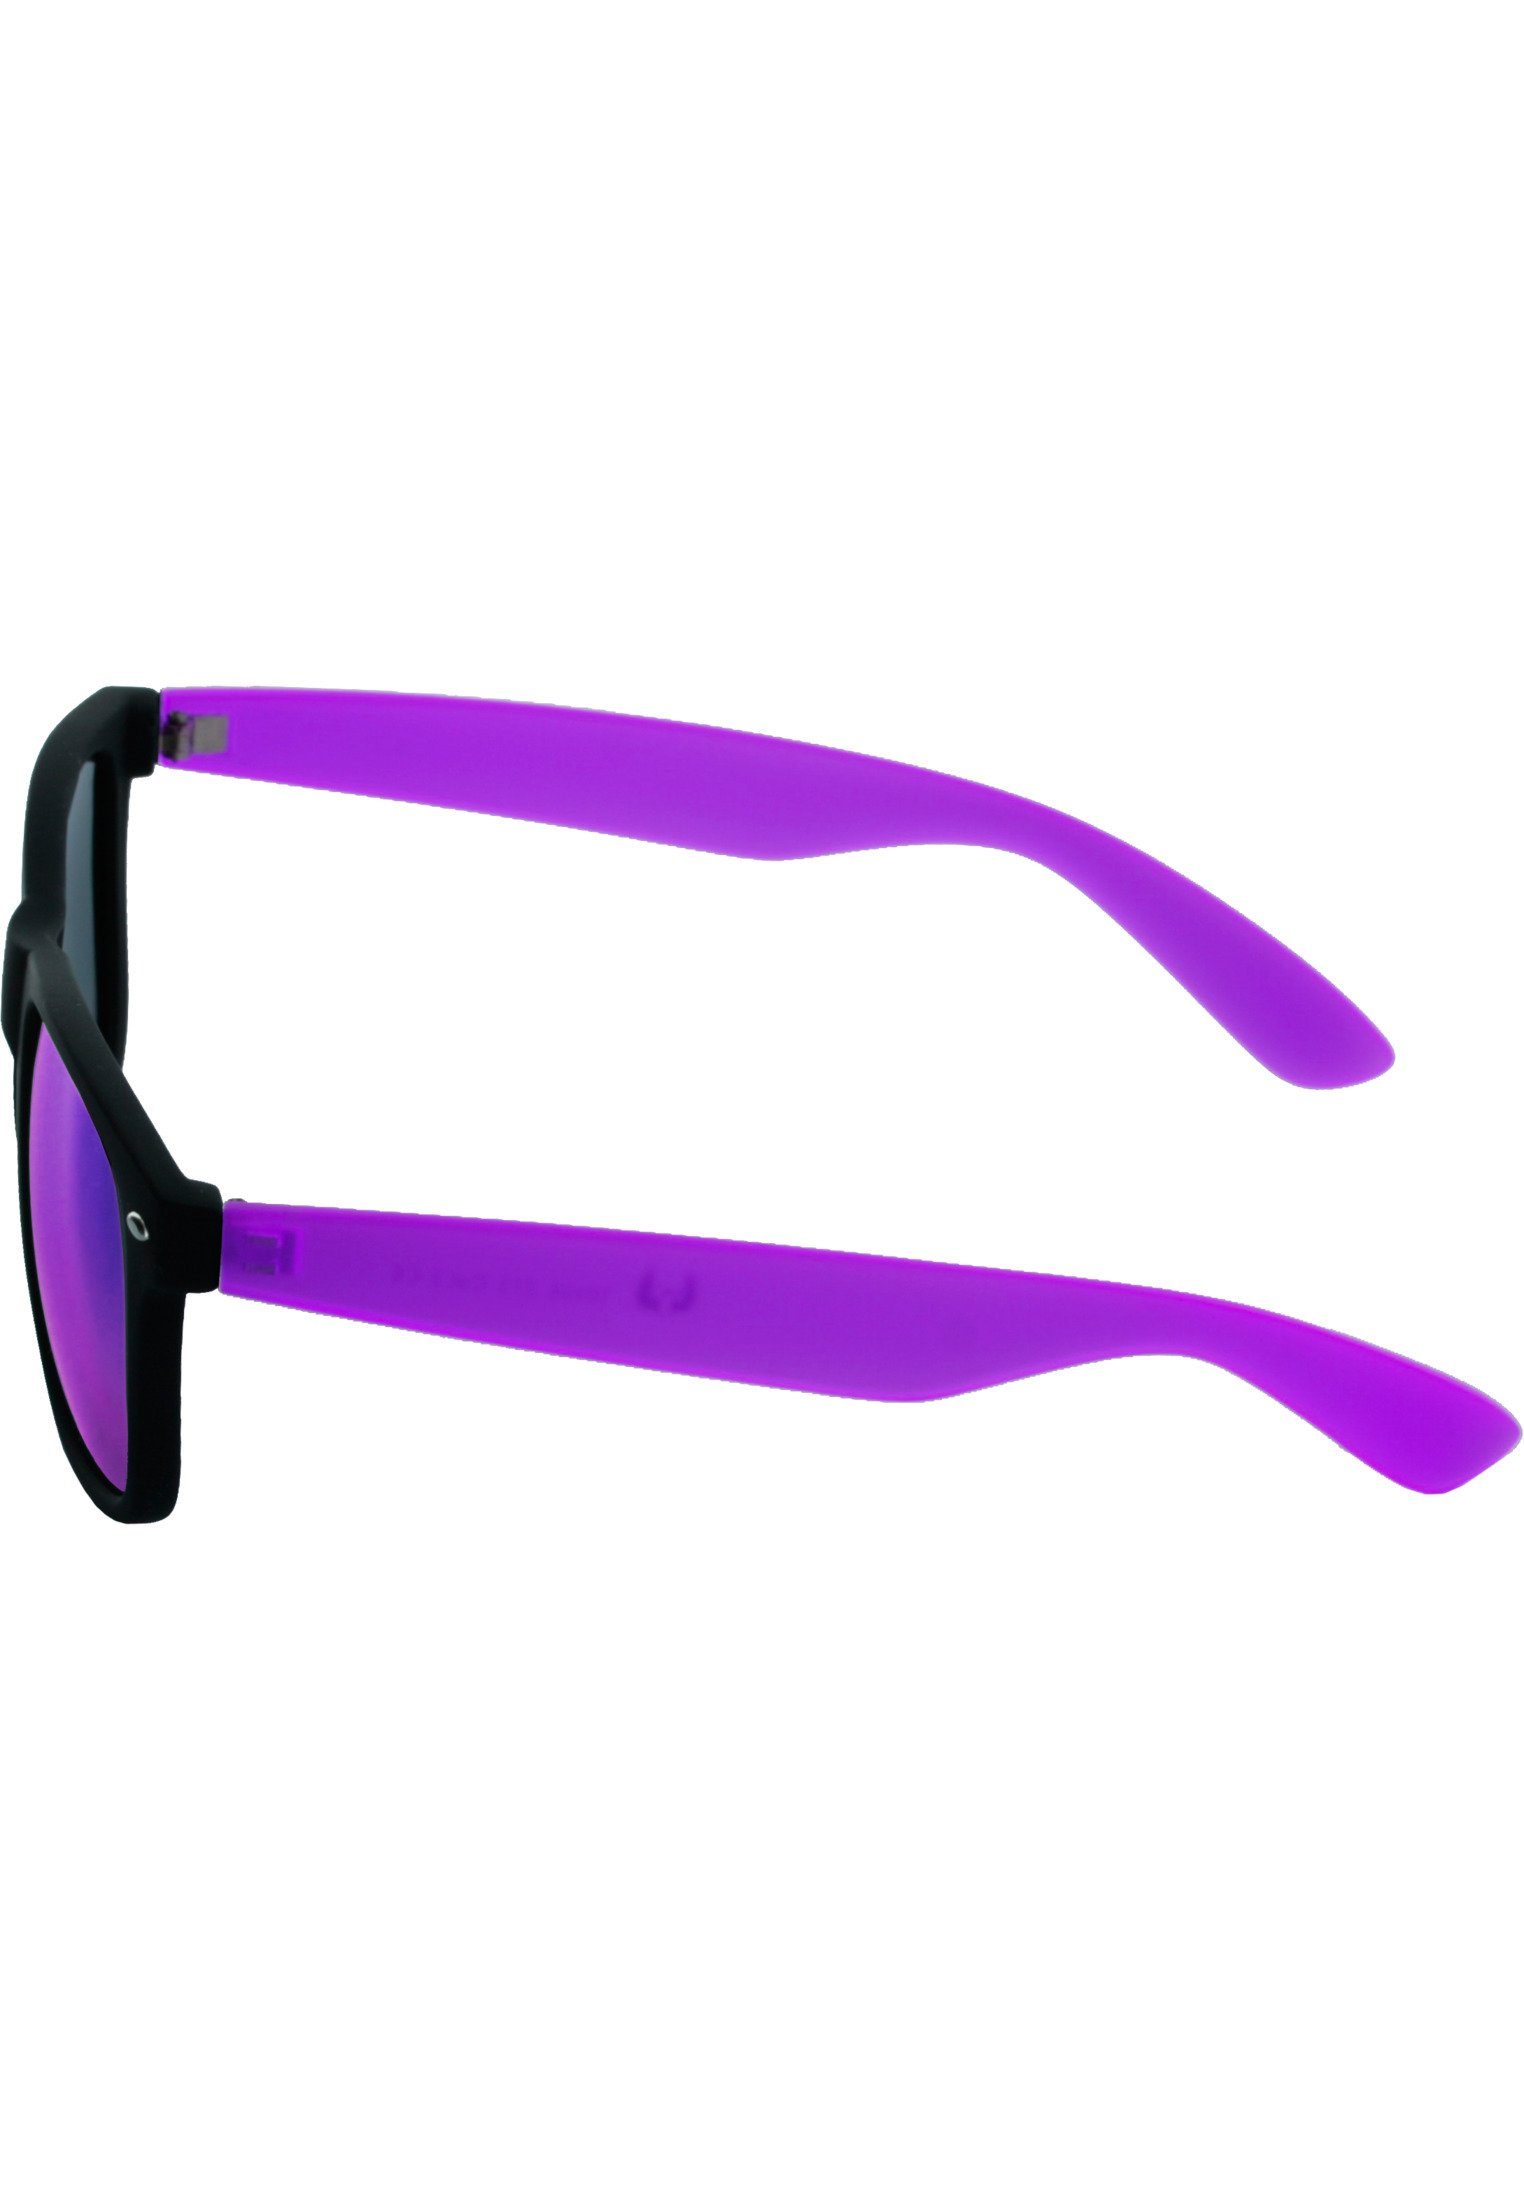 MSTRDS Sonnenbrille Accessoires blk/pur/pur Sunglasses Likoma Mirror